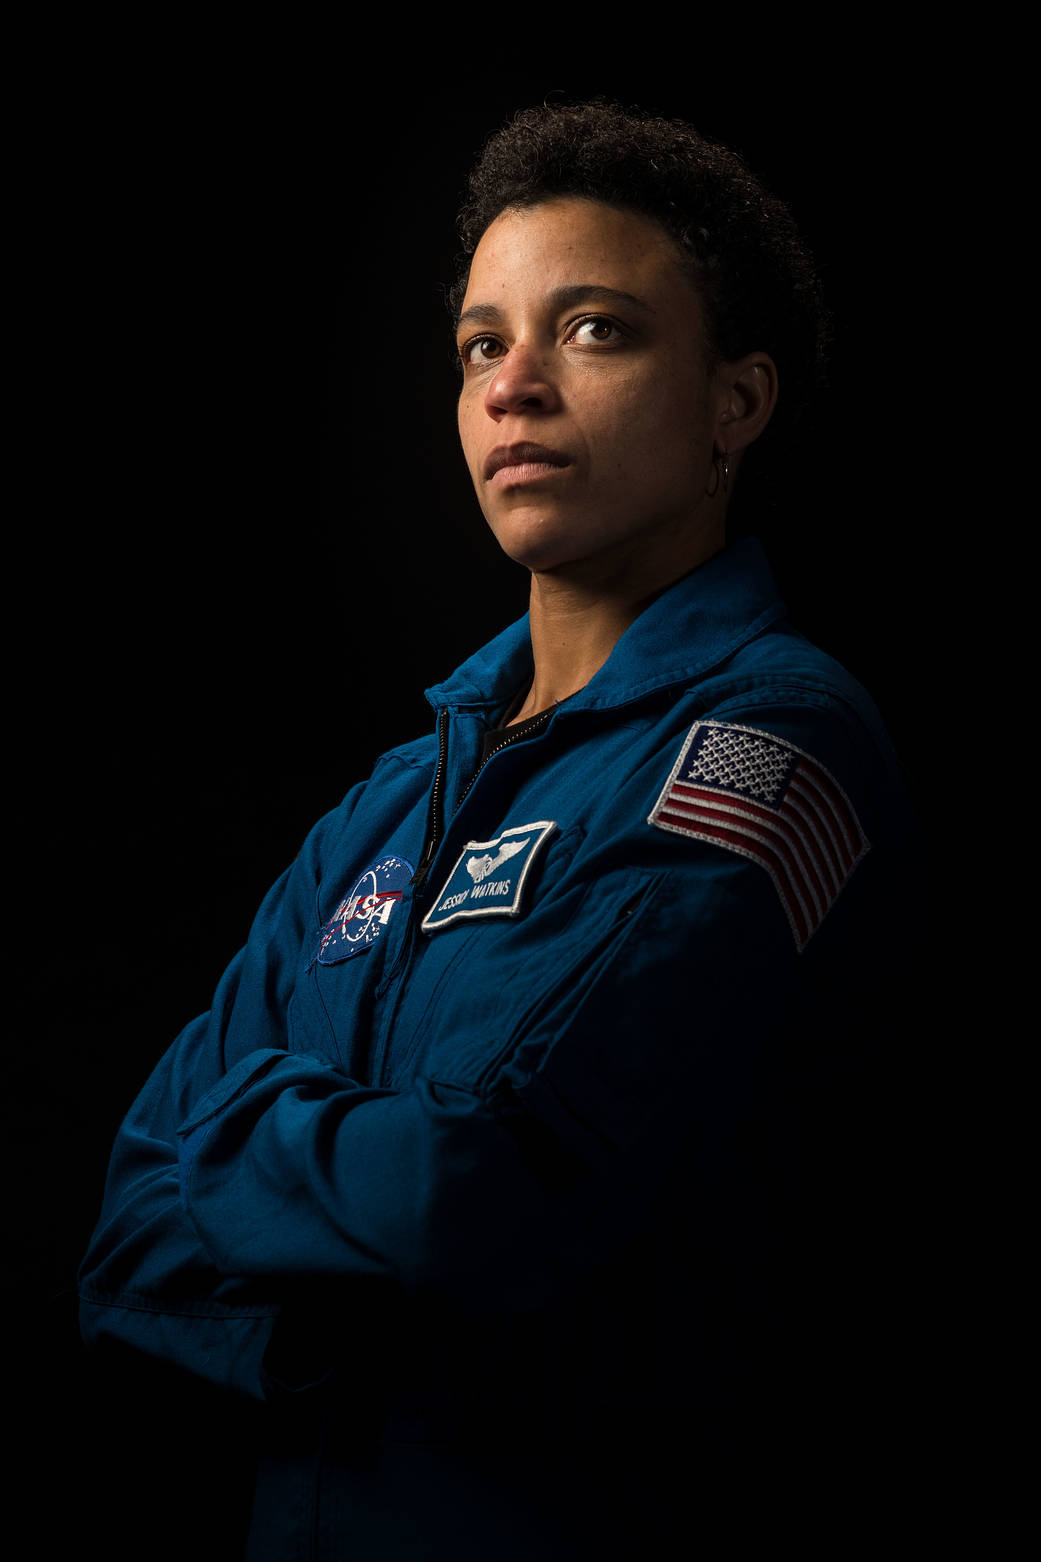 SpaceX Crew-4 Mission Specialist Jessica Watkins